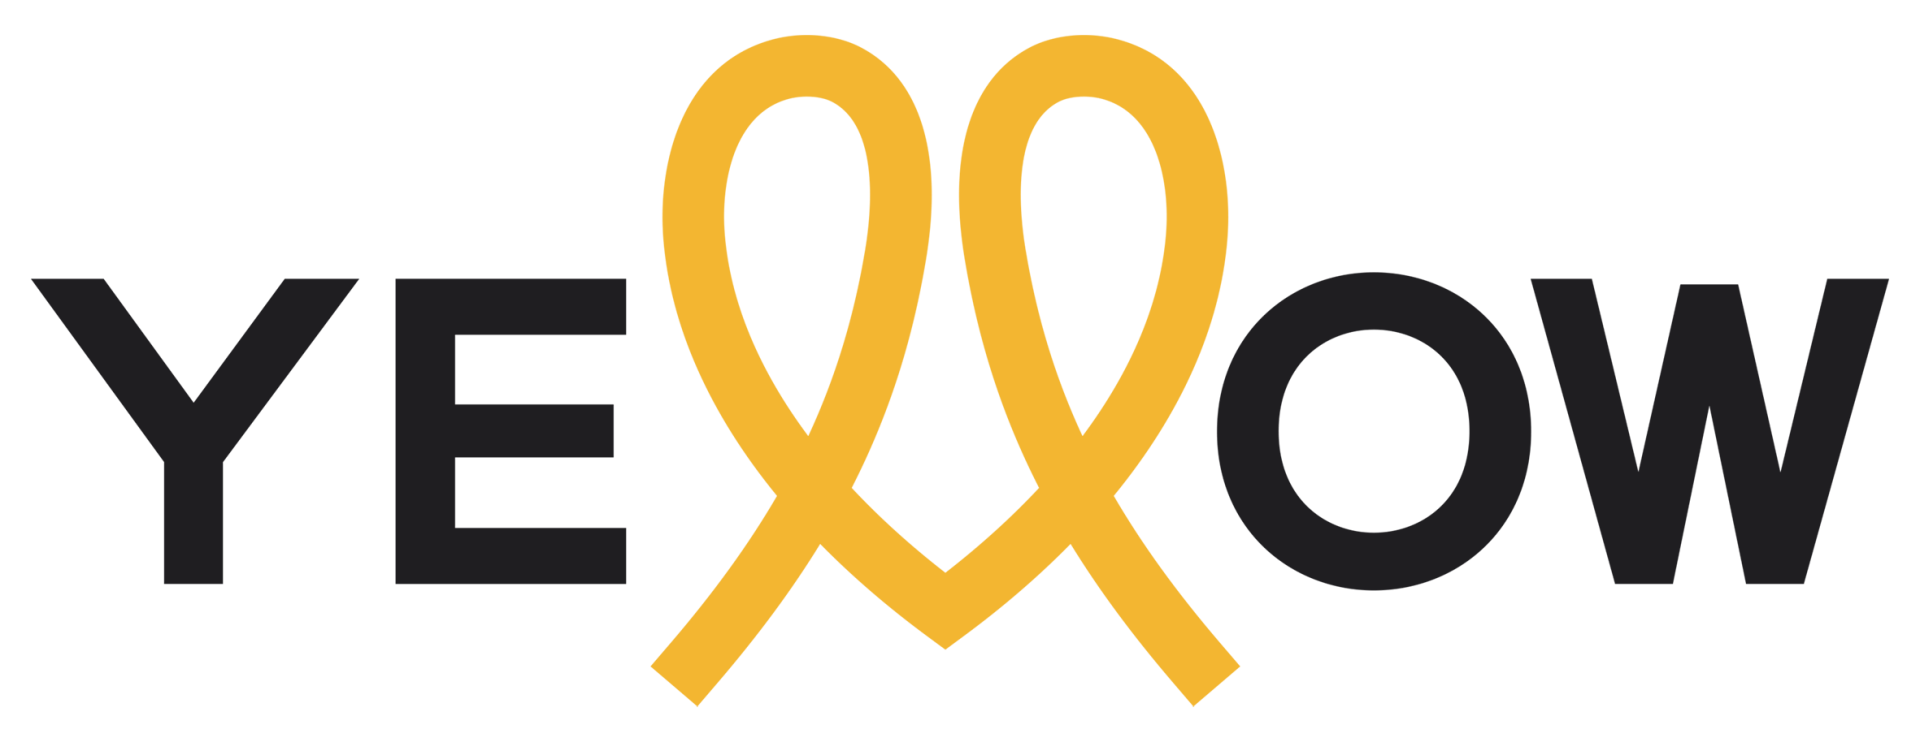 Yellow logo 